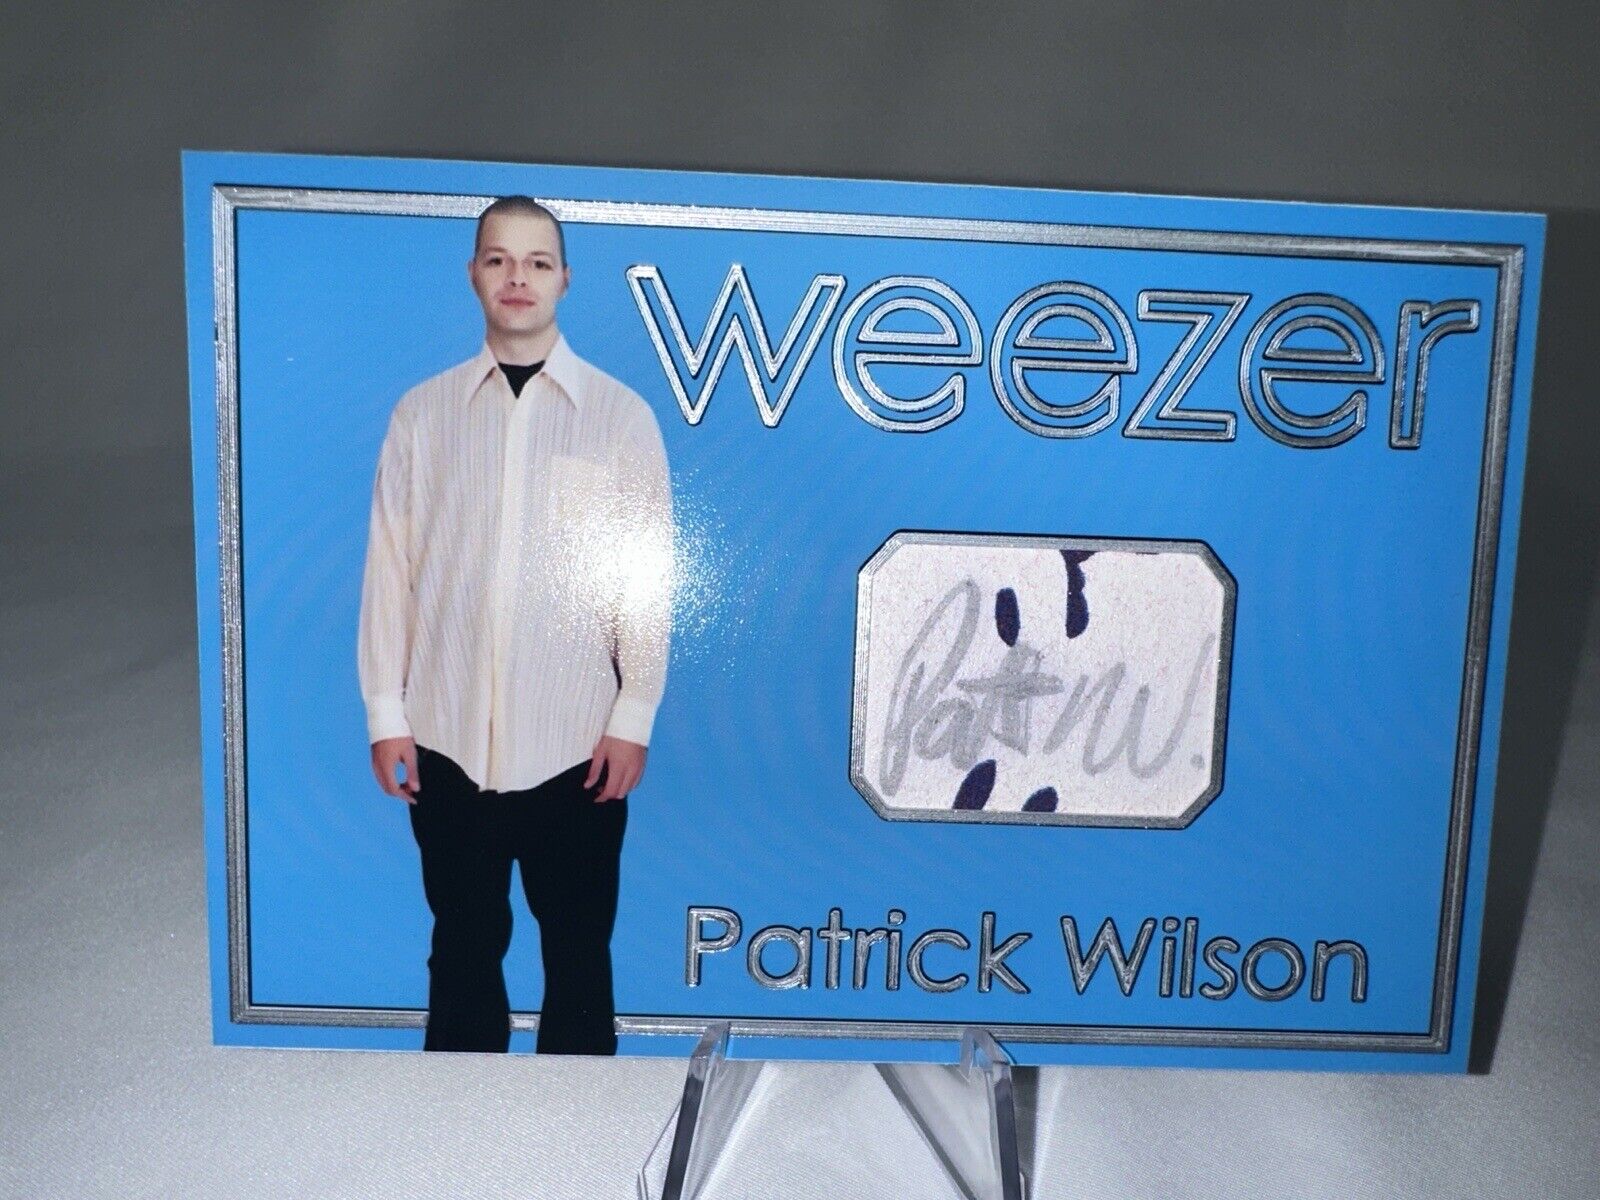 Patrick Wilson Signed Custom Weezer Trading Card - JSA AT70617